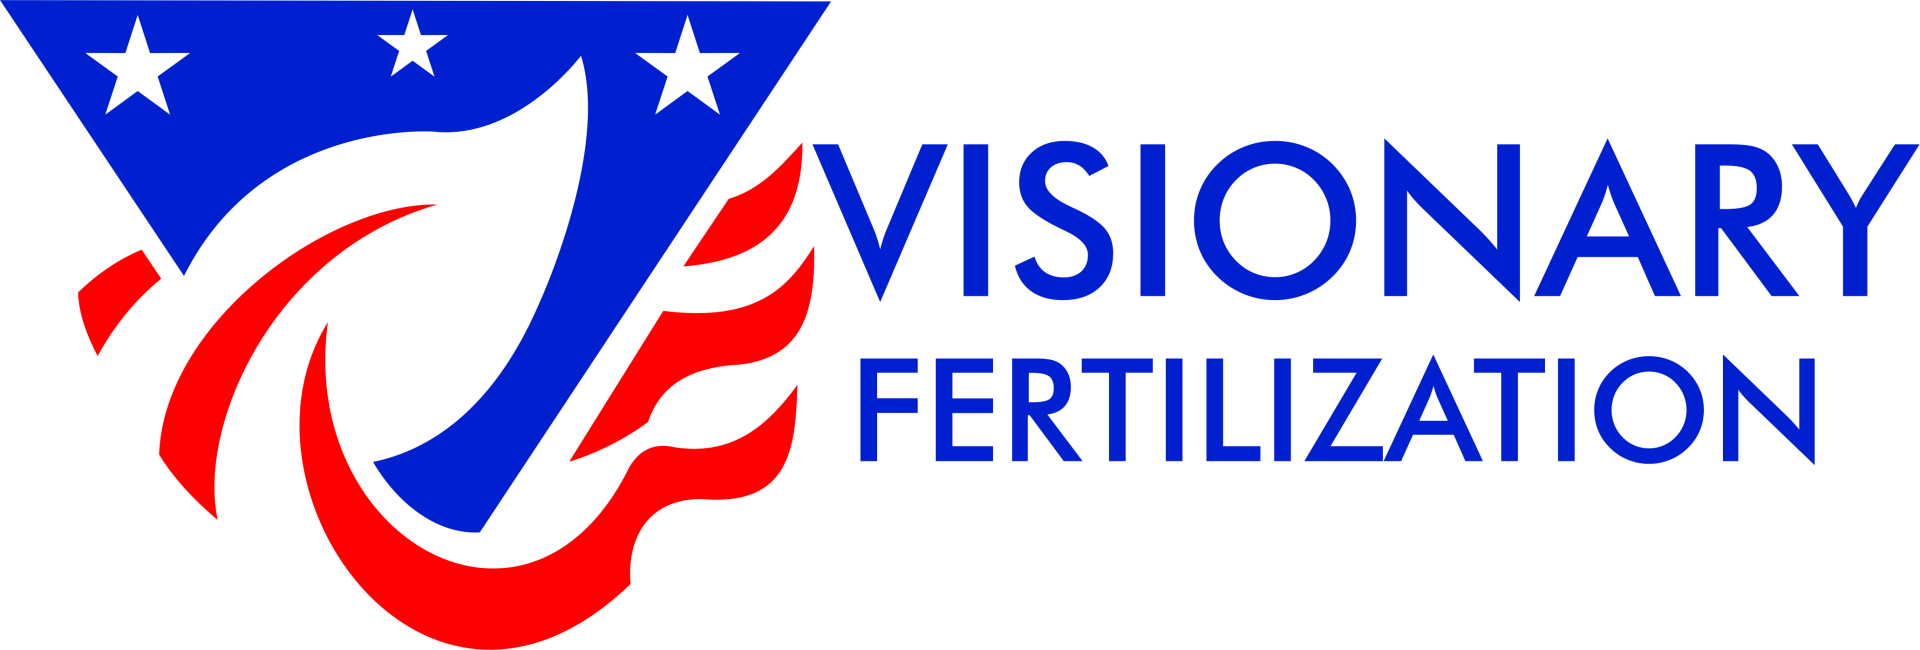 Lawn Fertilization & Pest Control in Shelby Township MI - Visionary Fertilization